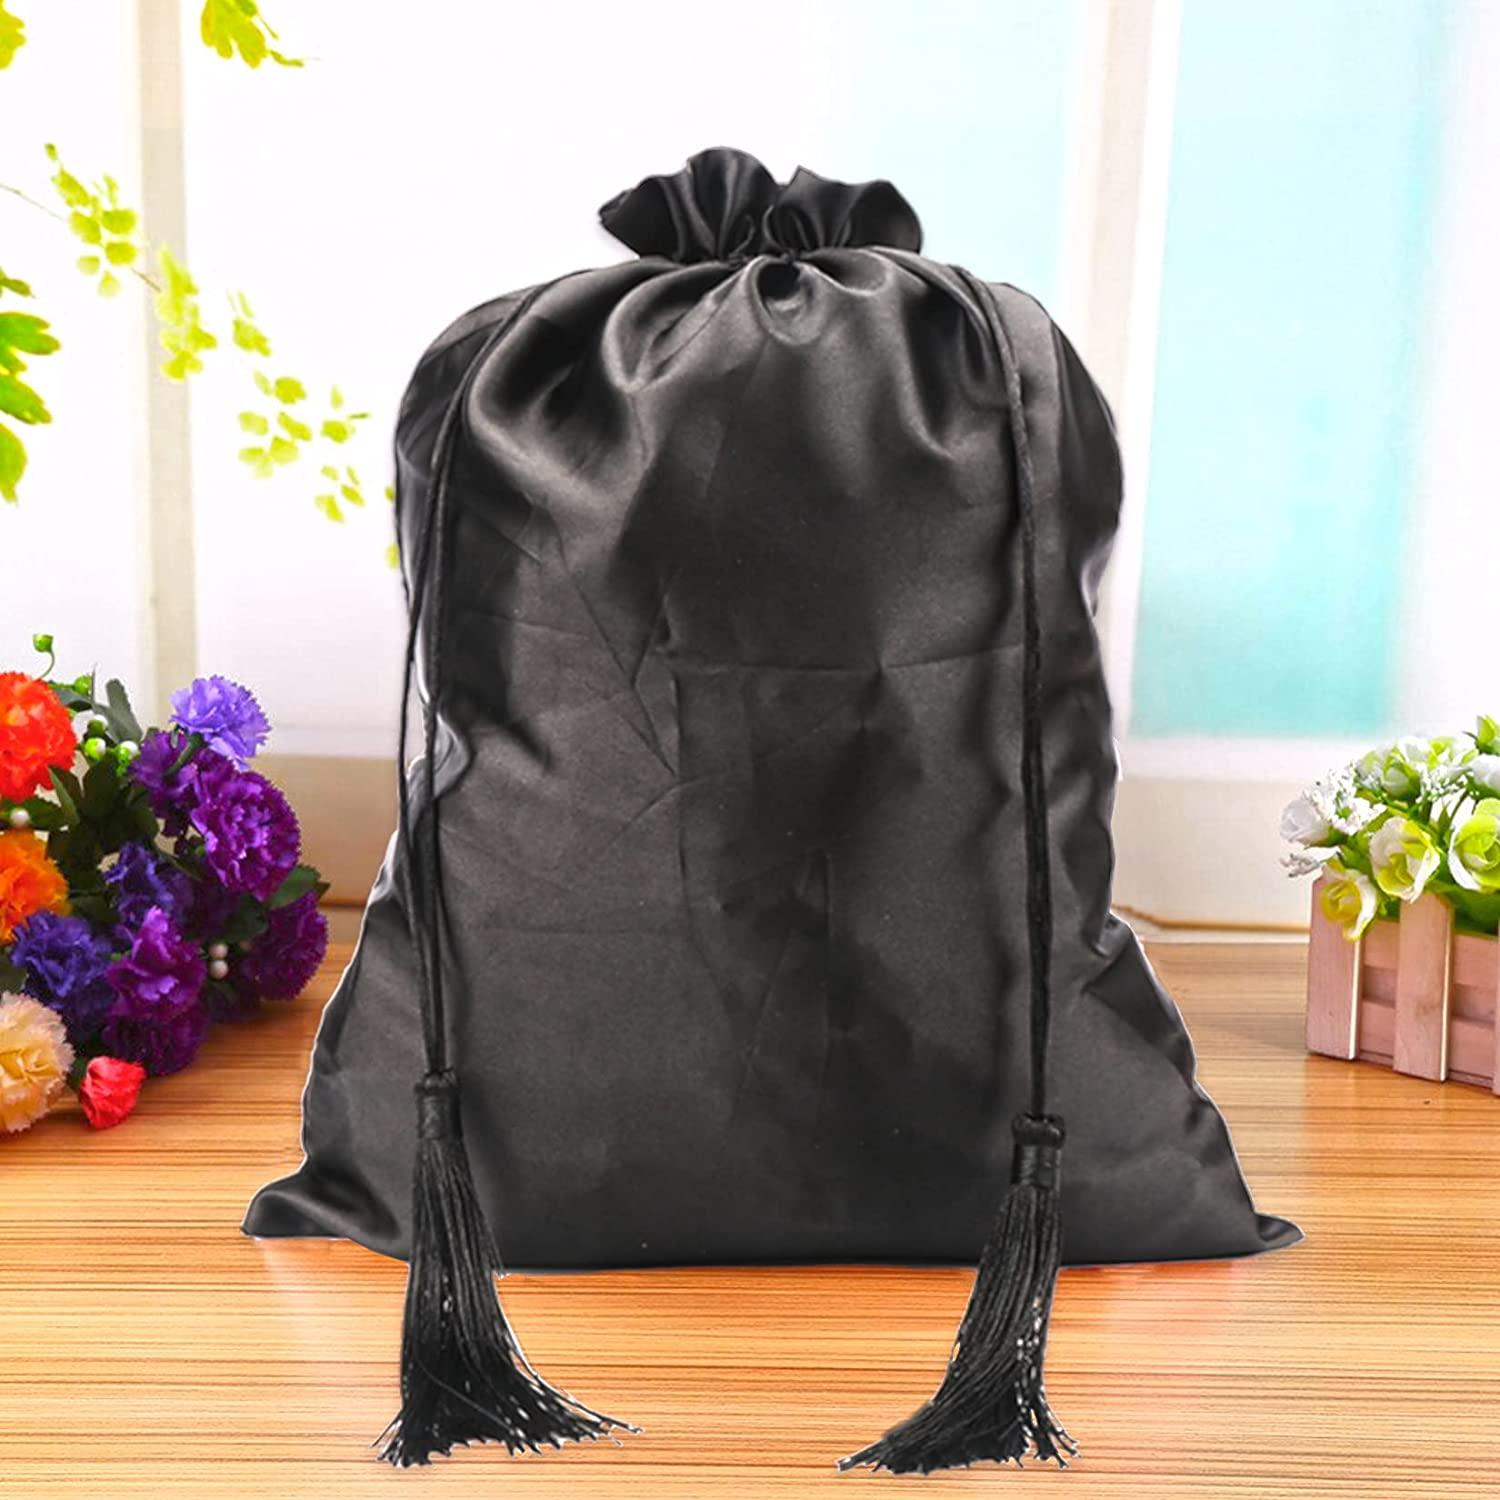 280 Satin bag ideas | satin bags, bags, purses and bags